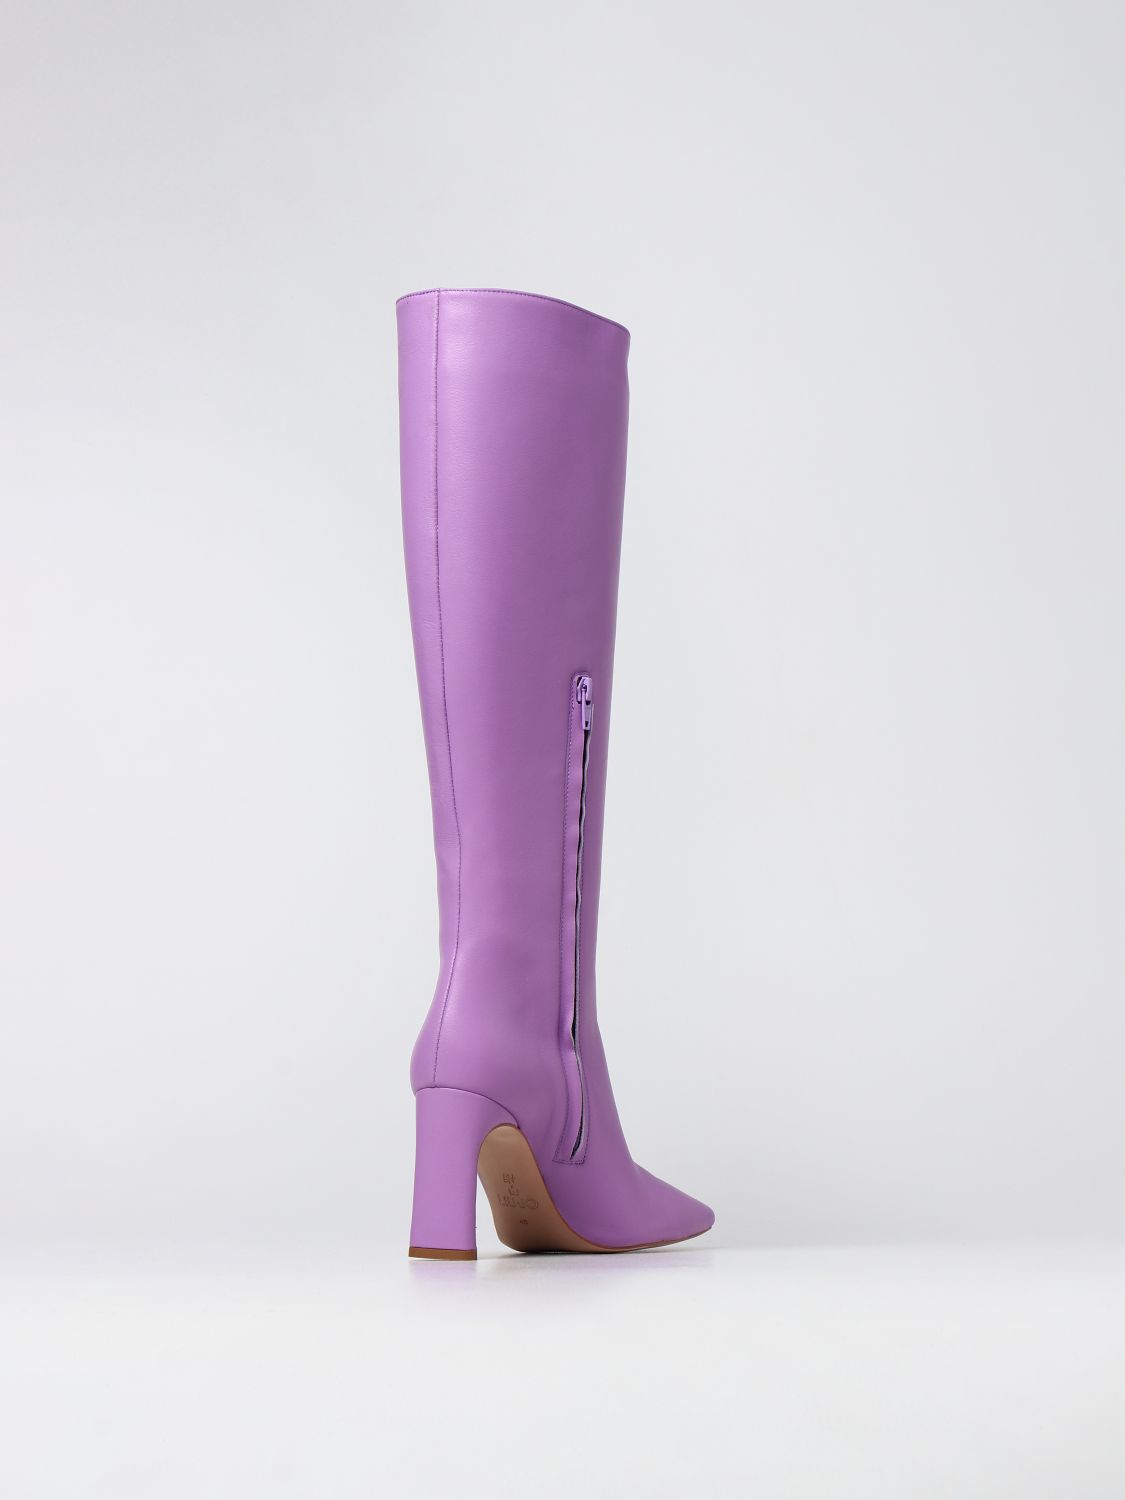 LIU JO: Leonie Hanne x boot in leather - Violet | Liu Jo boots  SA2703PXD84S1201 online on 